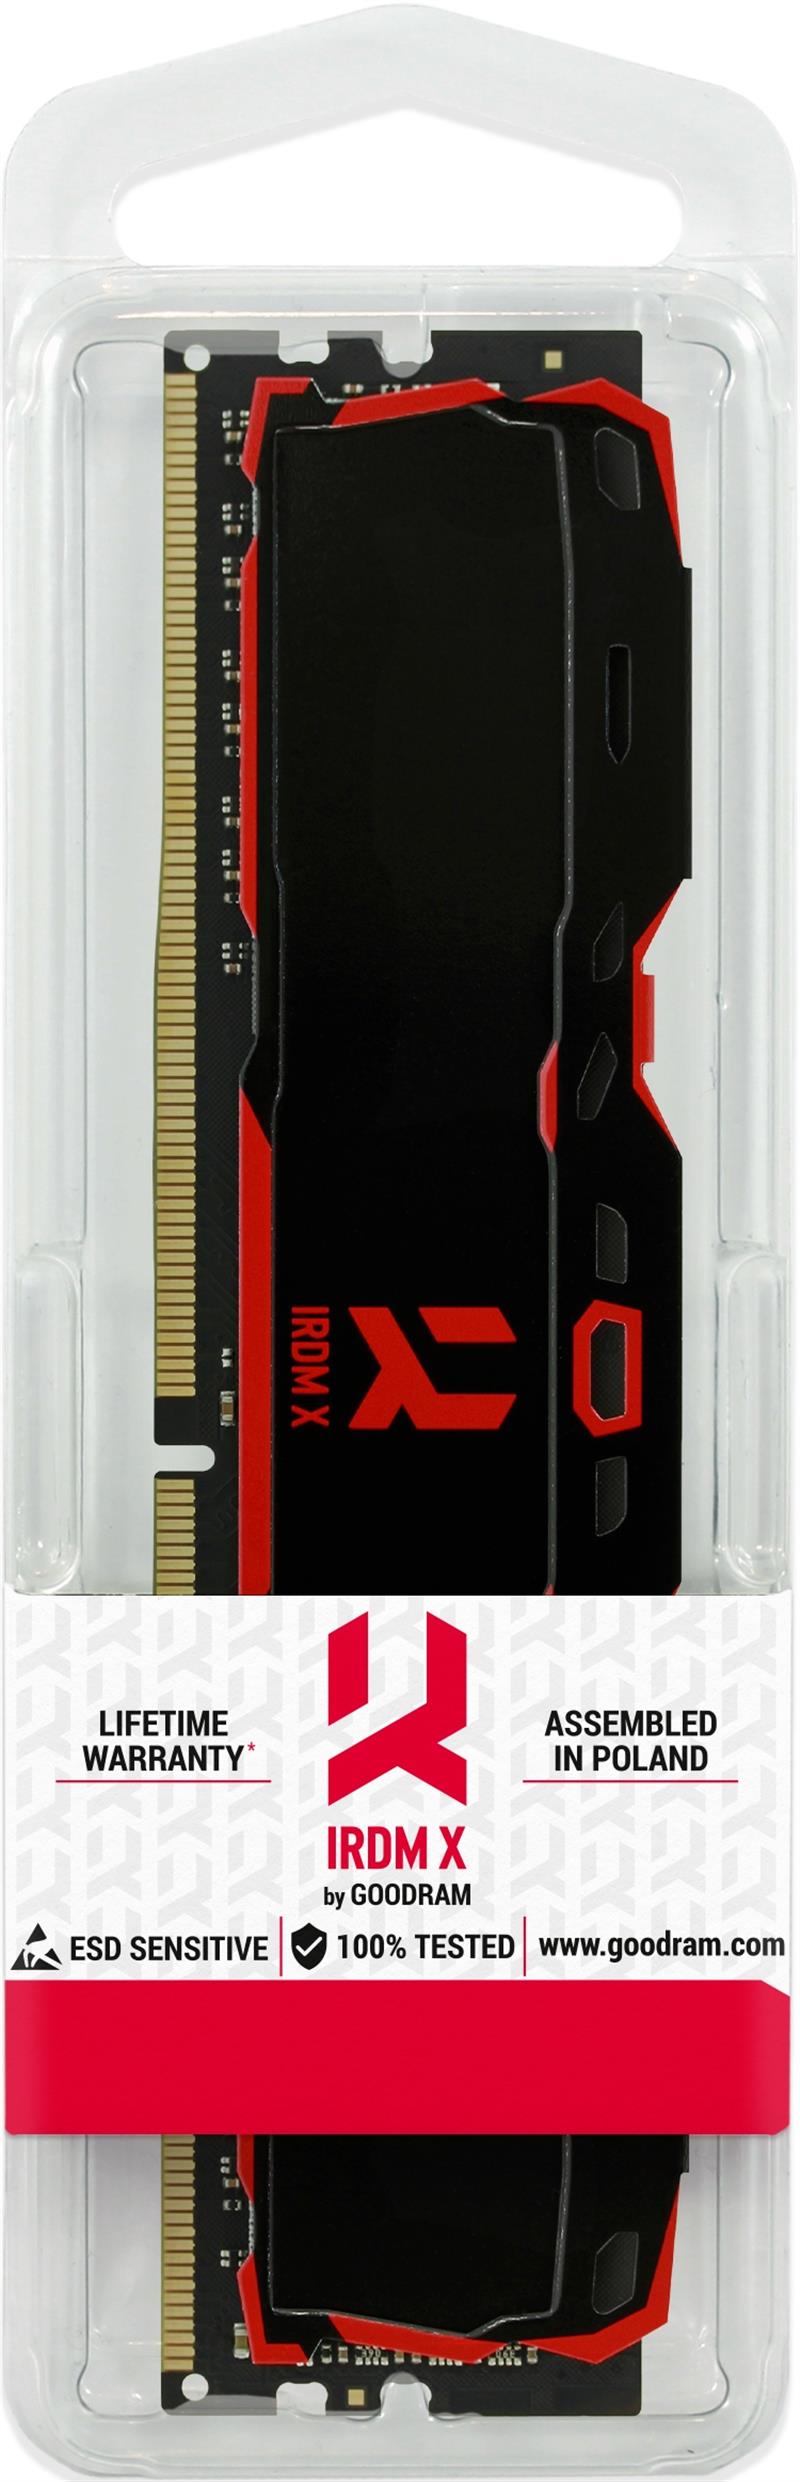 GOODRAM IRDM-X DDR4 DIMM 16GB 3200MHz CL16 16-20-20 1 20 - 1 35 V Black heatspreader with red logo